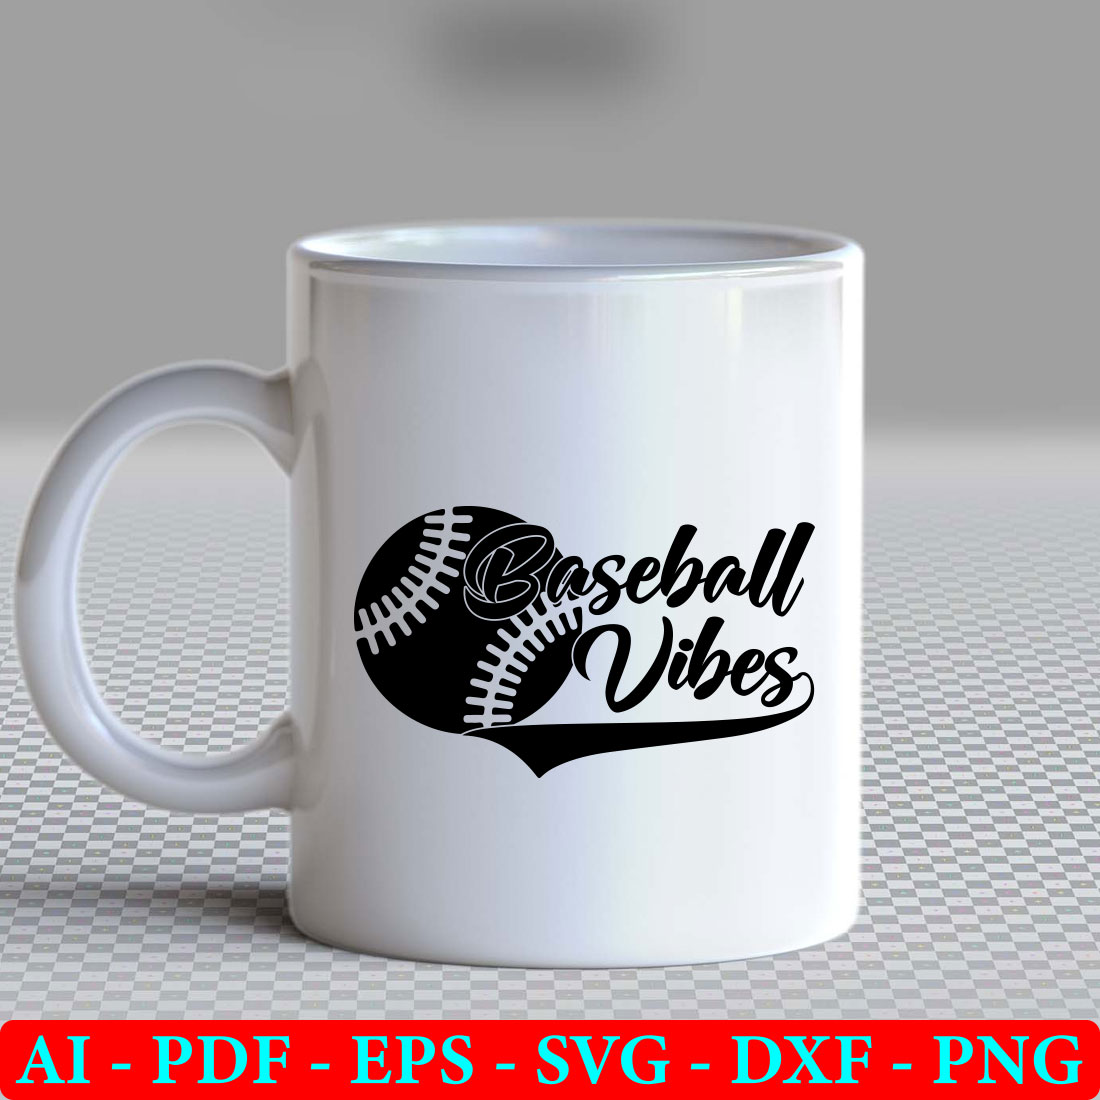 White coffee mug with a baseball vibes logo on it.